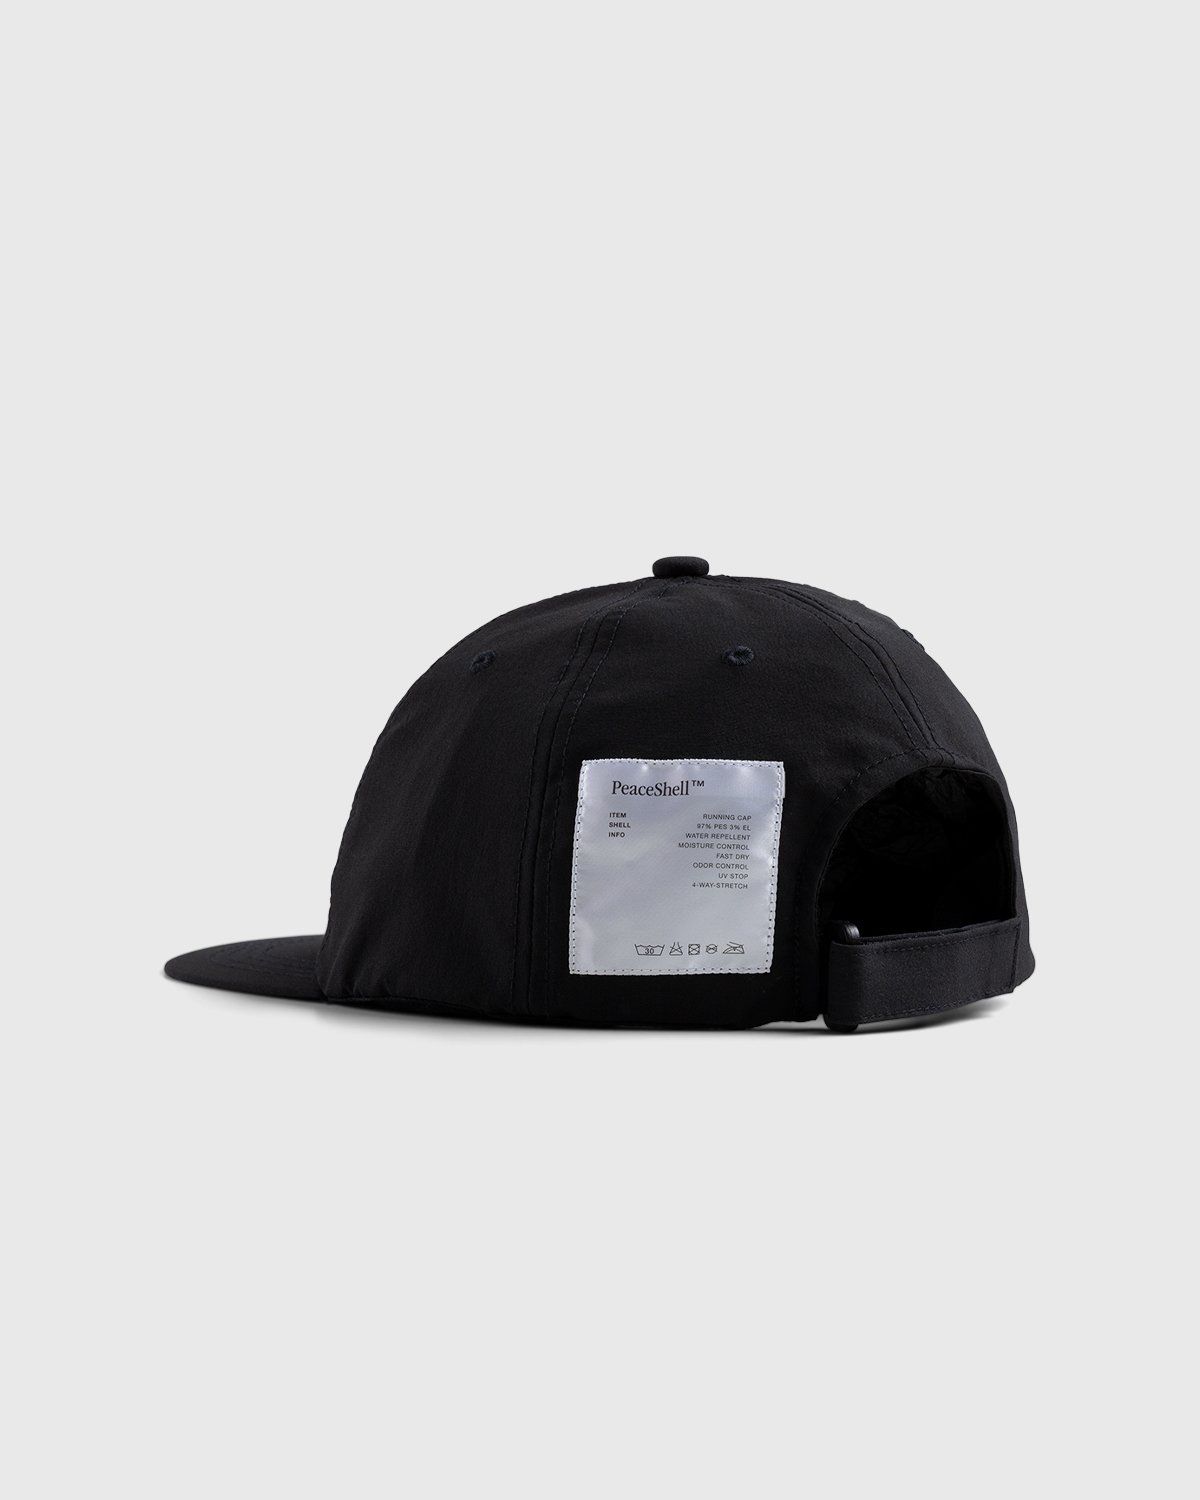 Satisfy x Highsnobiety – HS Sports Balance Running Cap Black - Hats - Black - Image 3